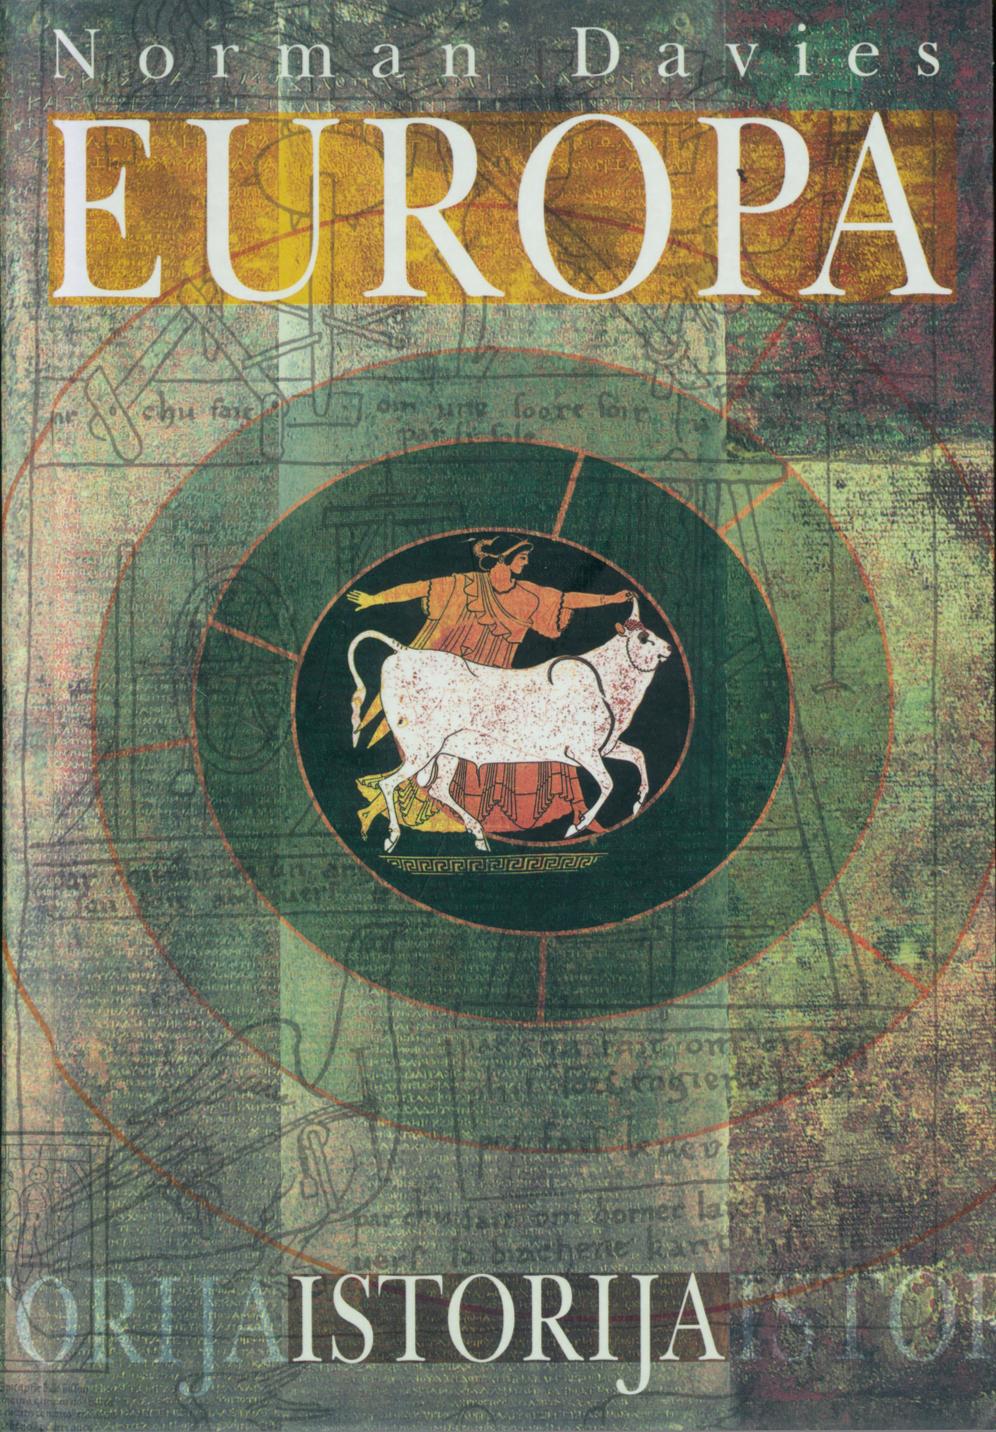 Norman.Davies.-.Europa.Istorija.2008.LT